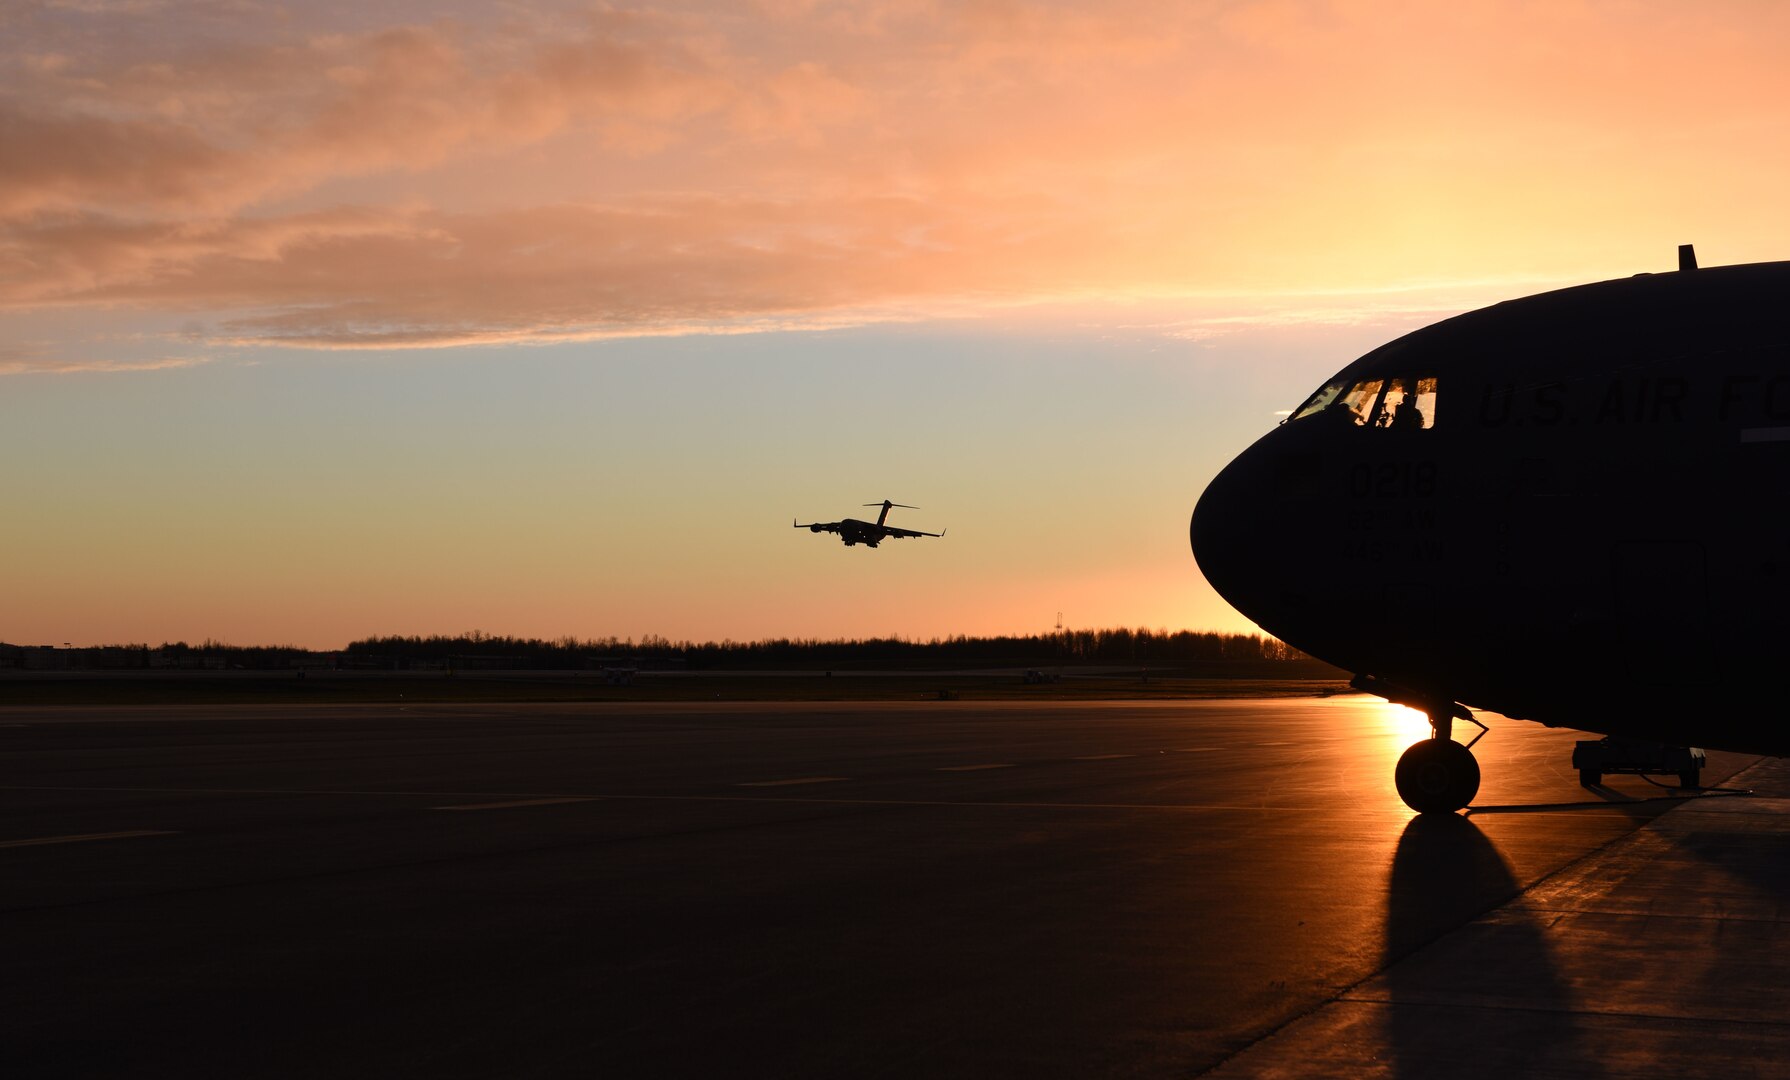 A C-17 Globemaster III lands on the runway after an evening sortie